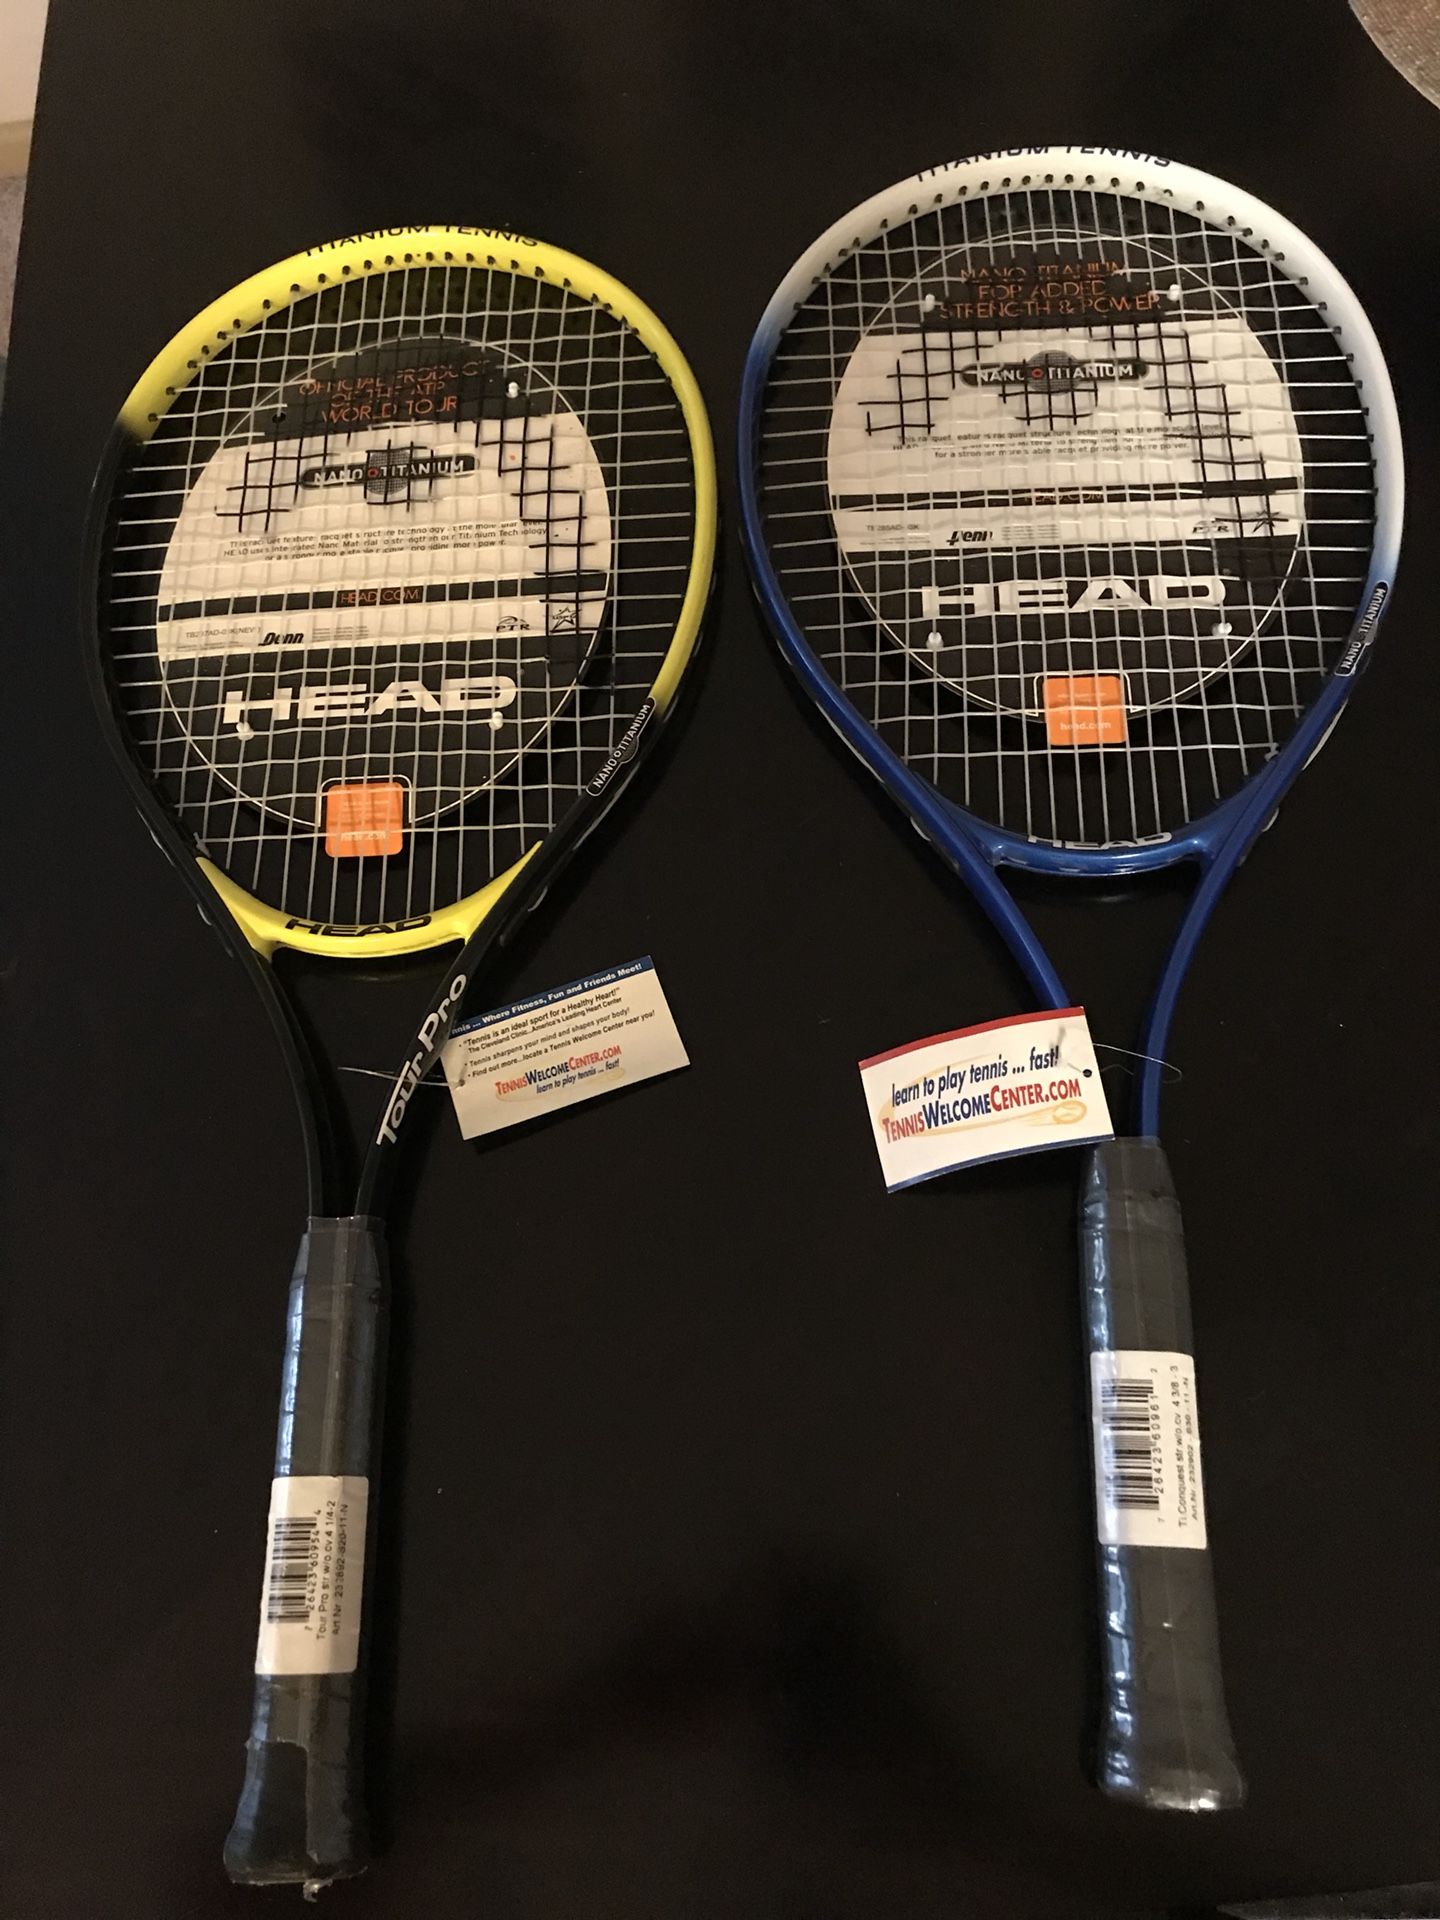 Pair of brand new tennis rackets